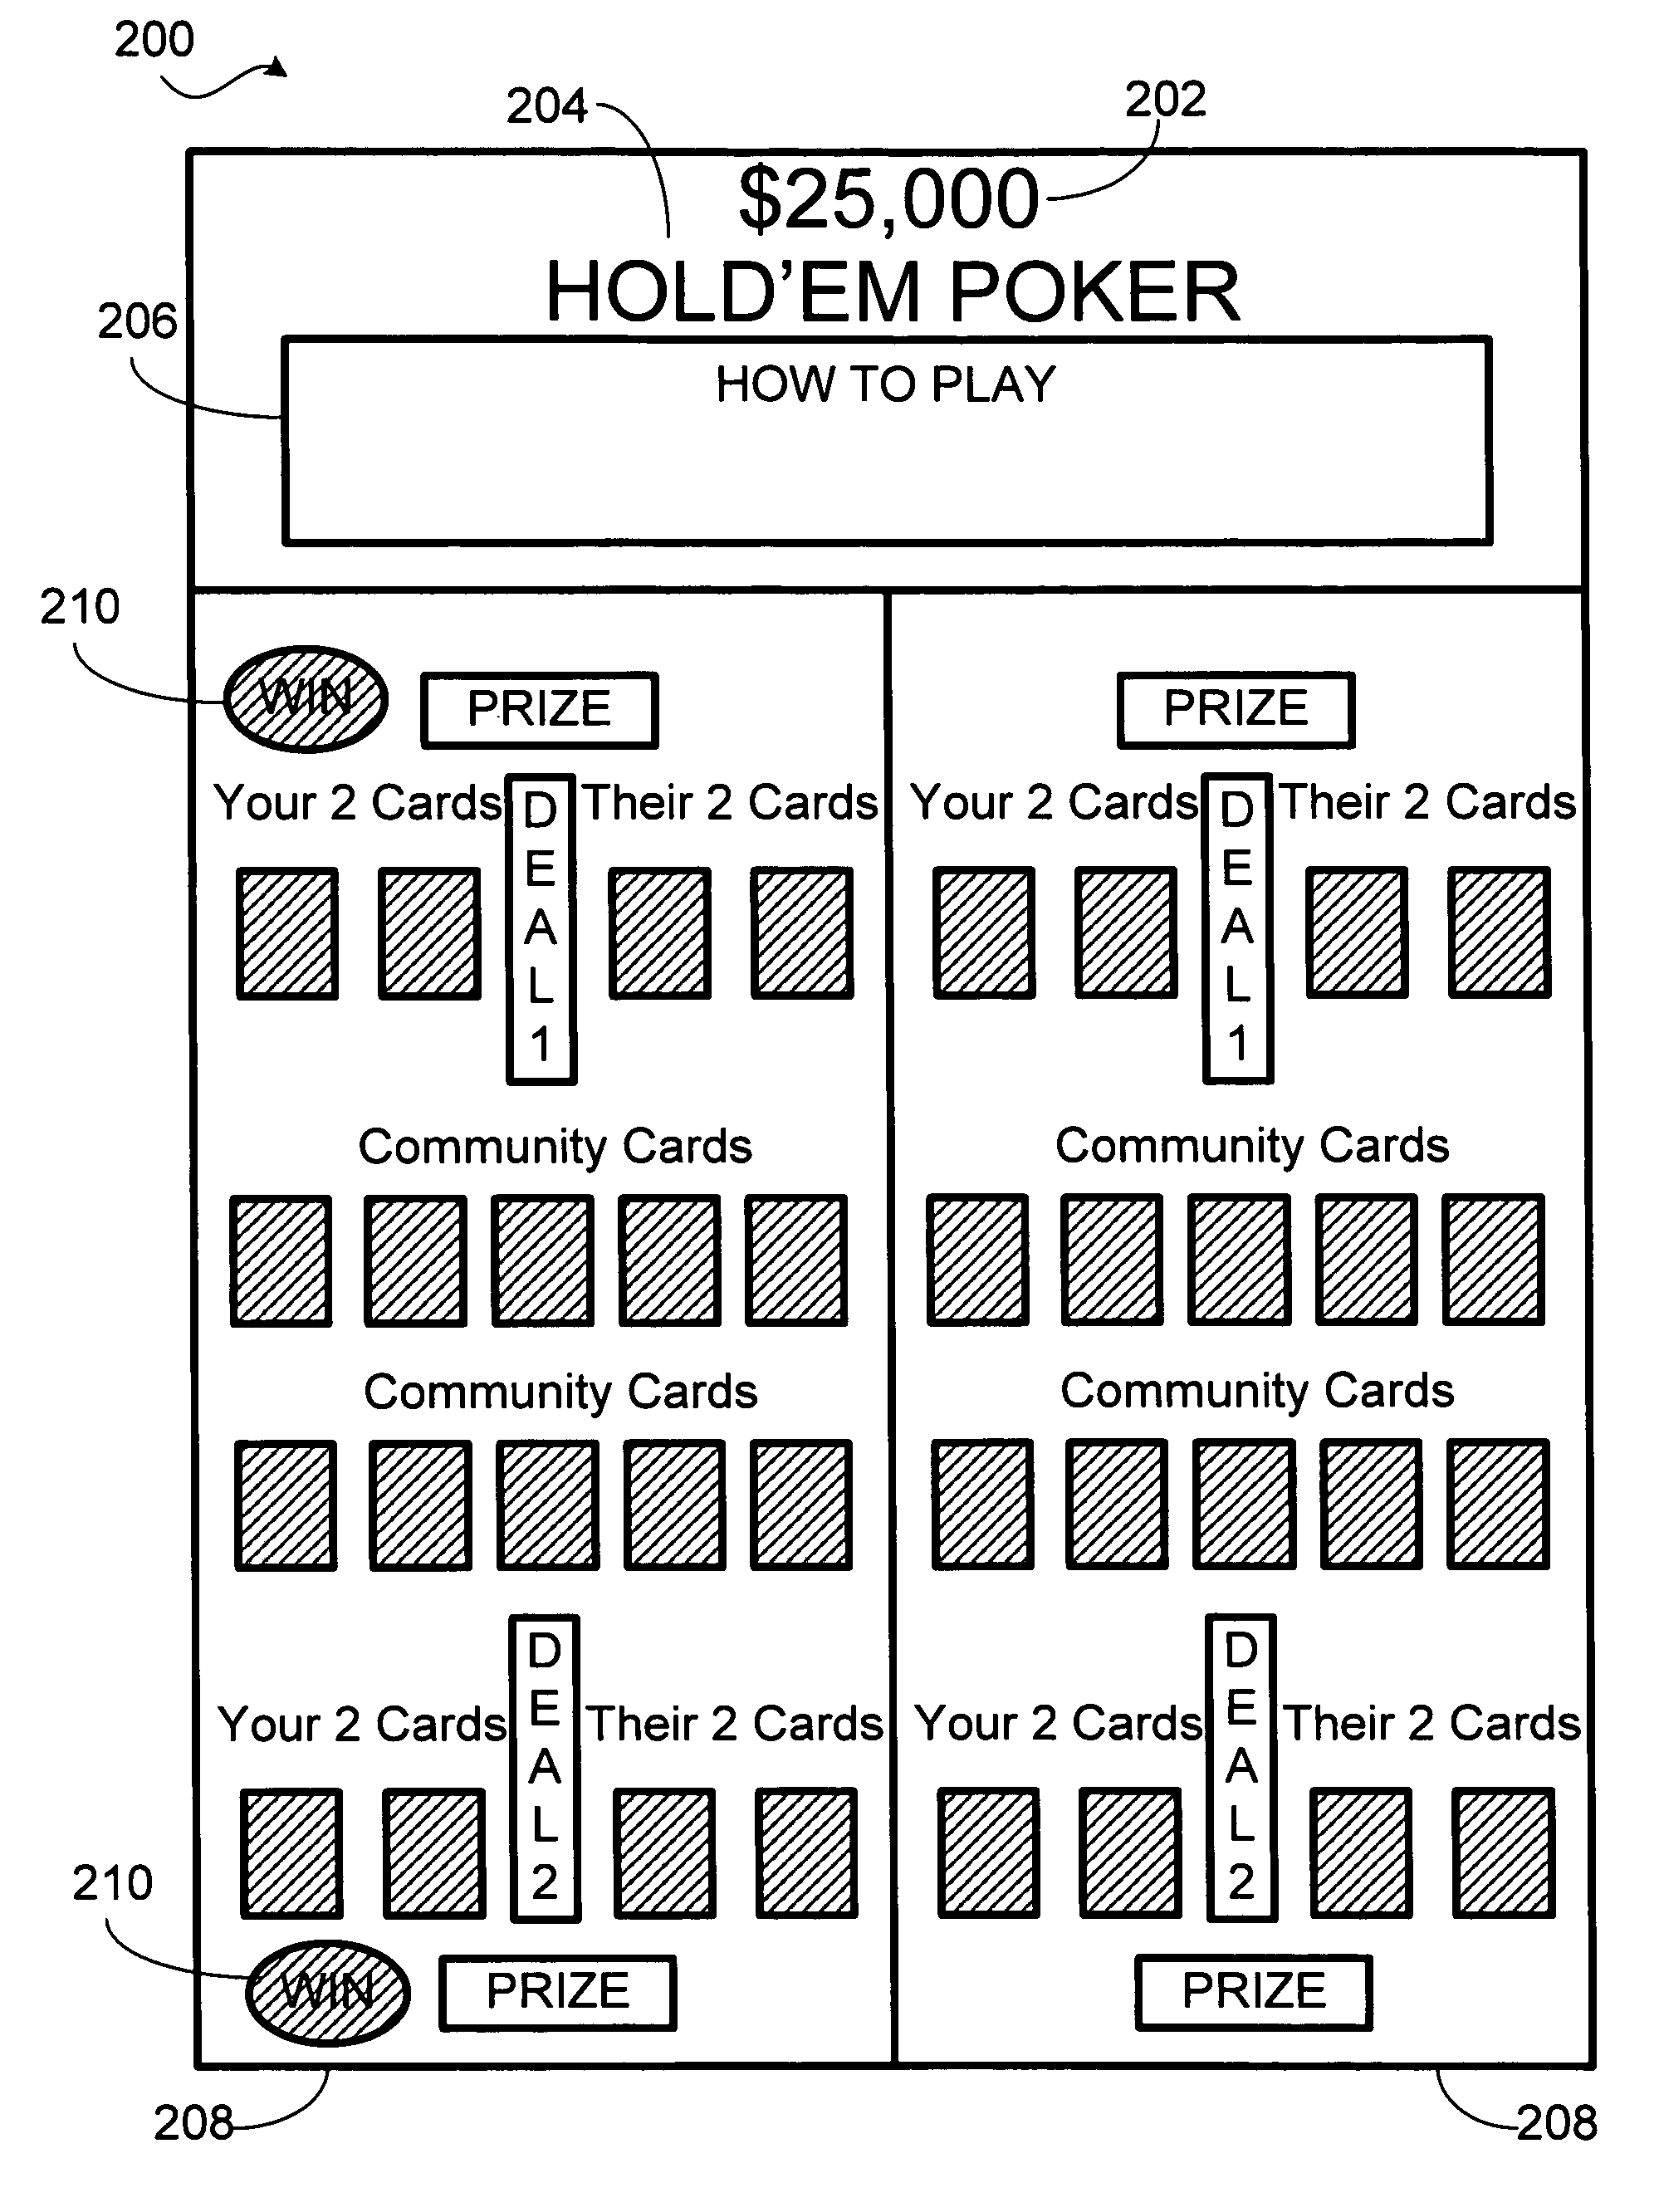 Poker style scratch-ticket lottery games